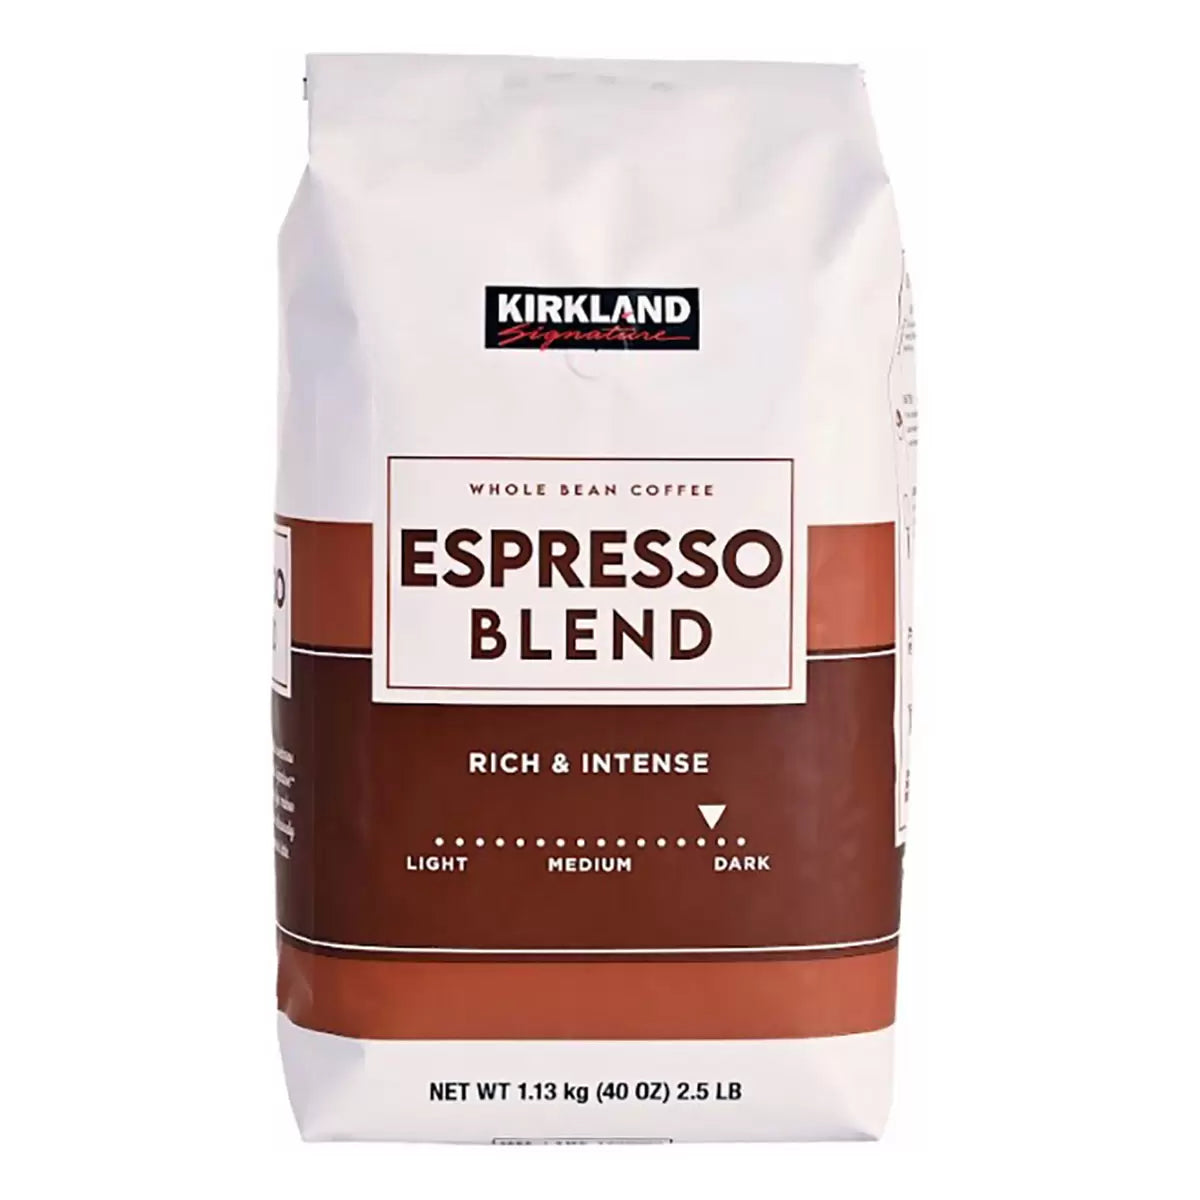 Kirkland Signature Whole Bean Coffee Espresso Blend - 1.13kg